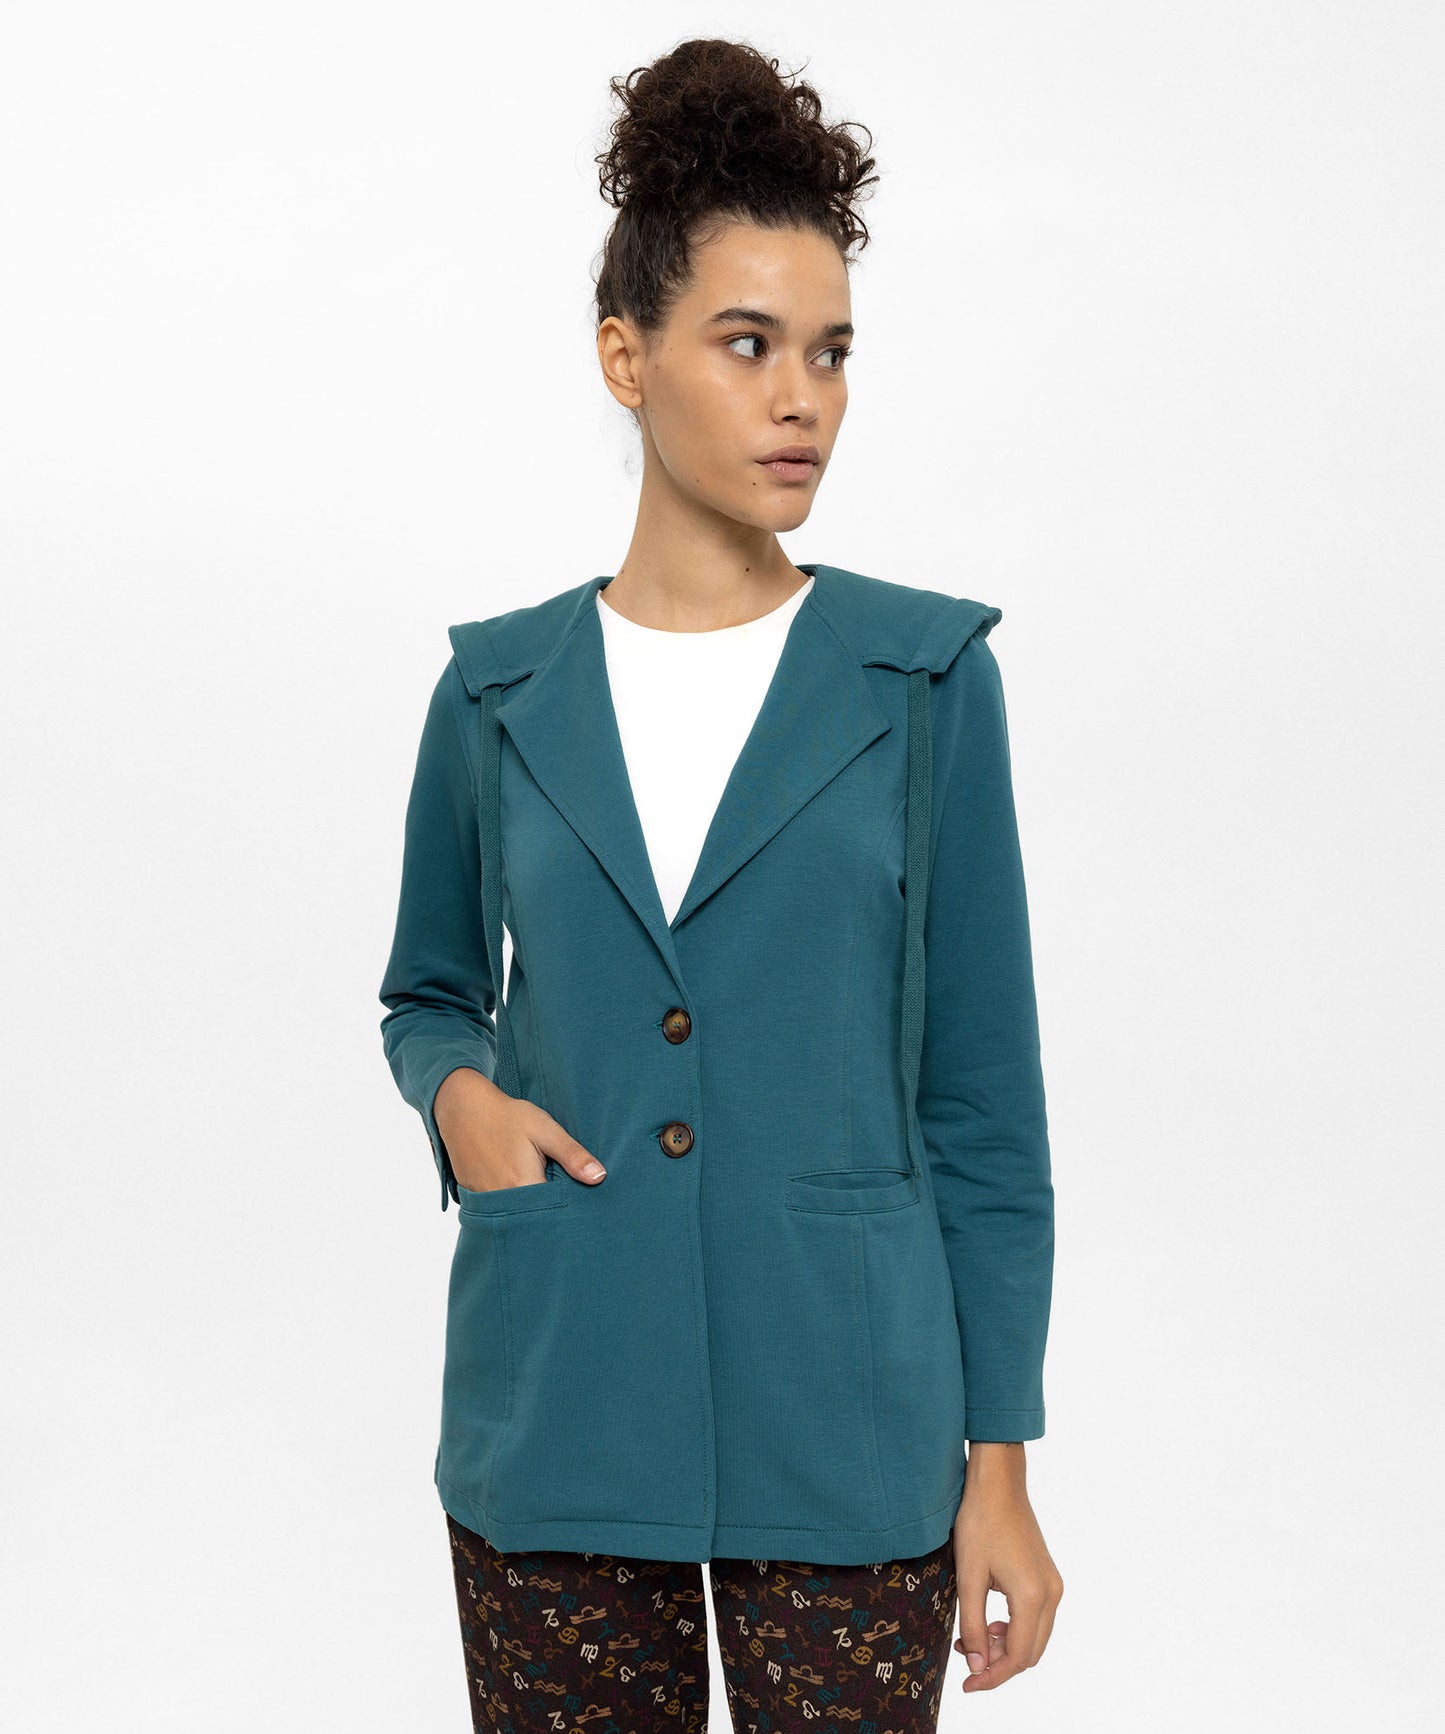 Nefti Yeşil Kapüşonlu Ceket